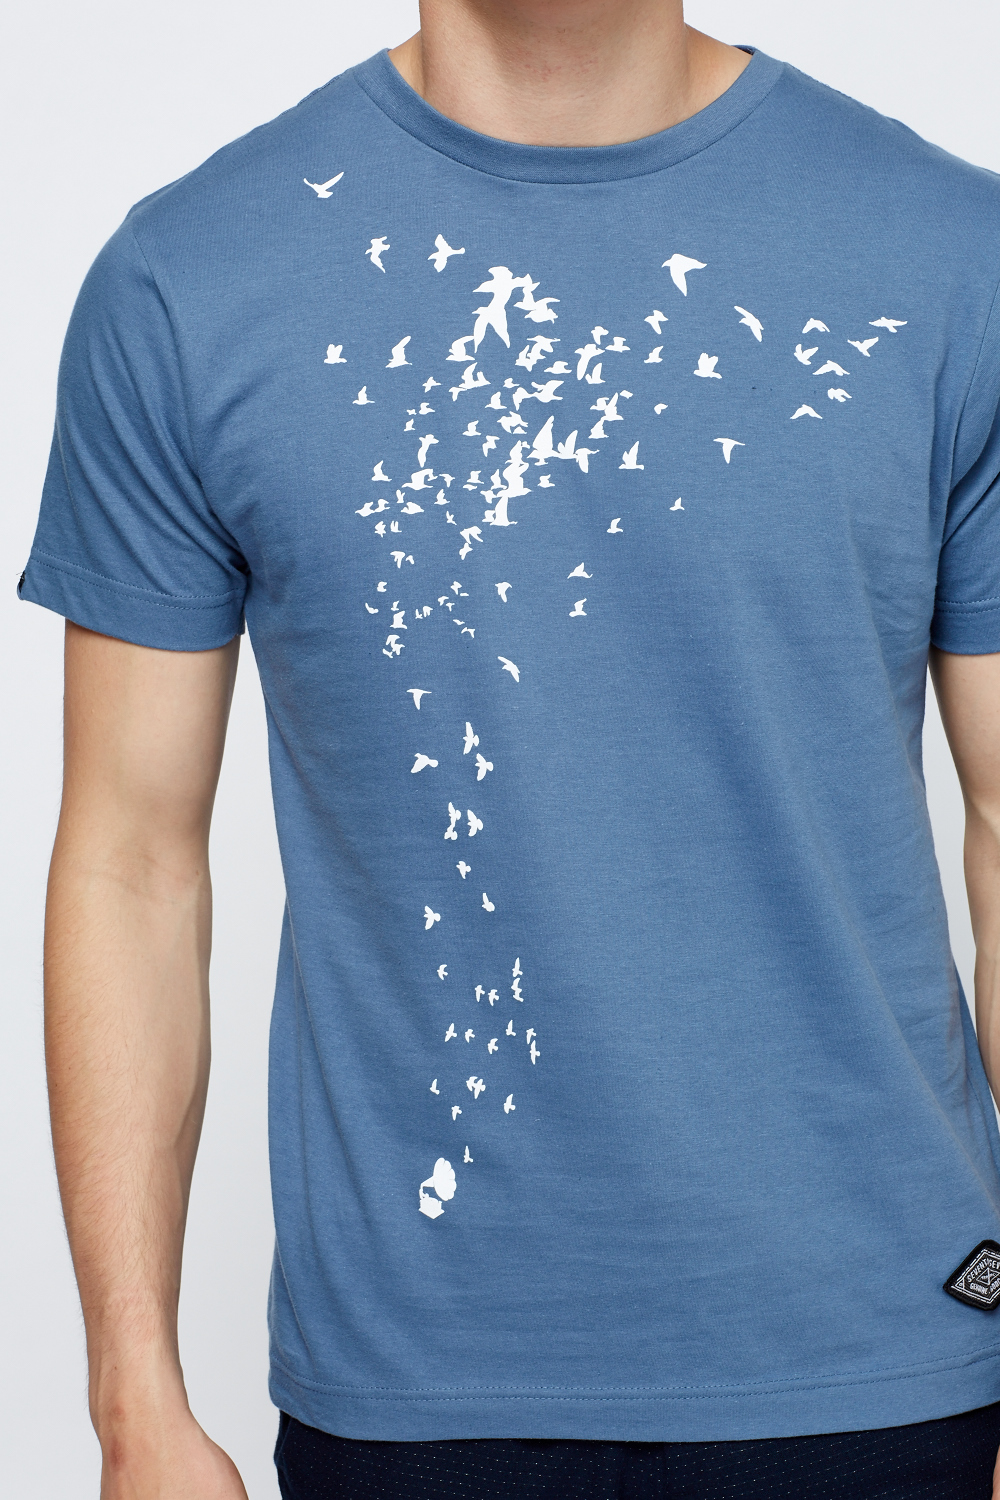 Bird Printed T-Shirt - Just $7